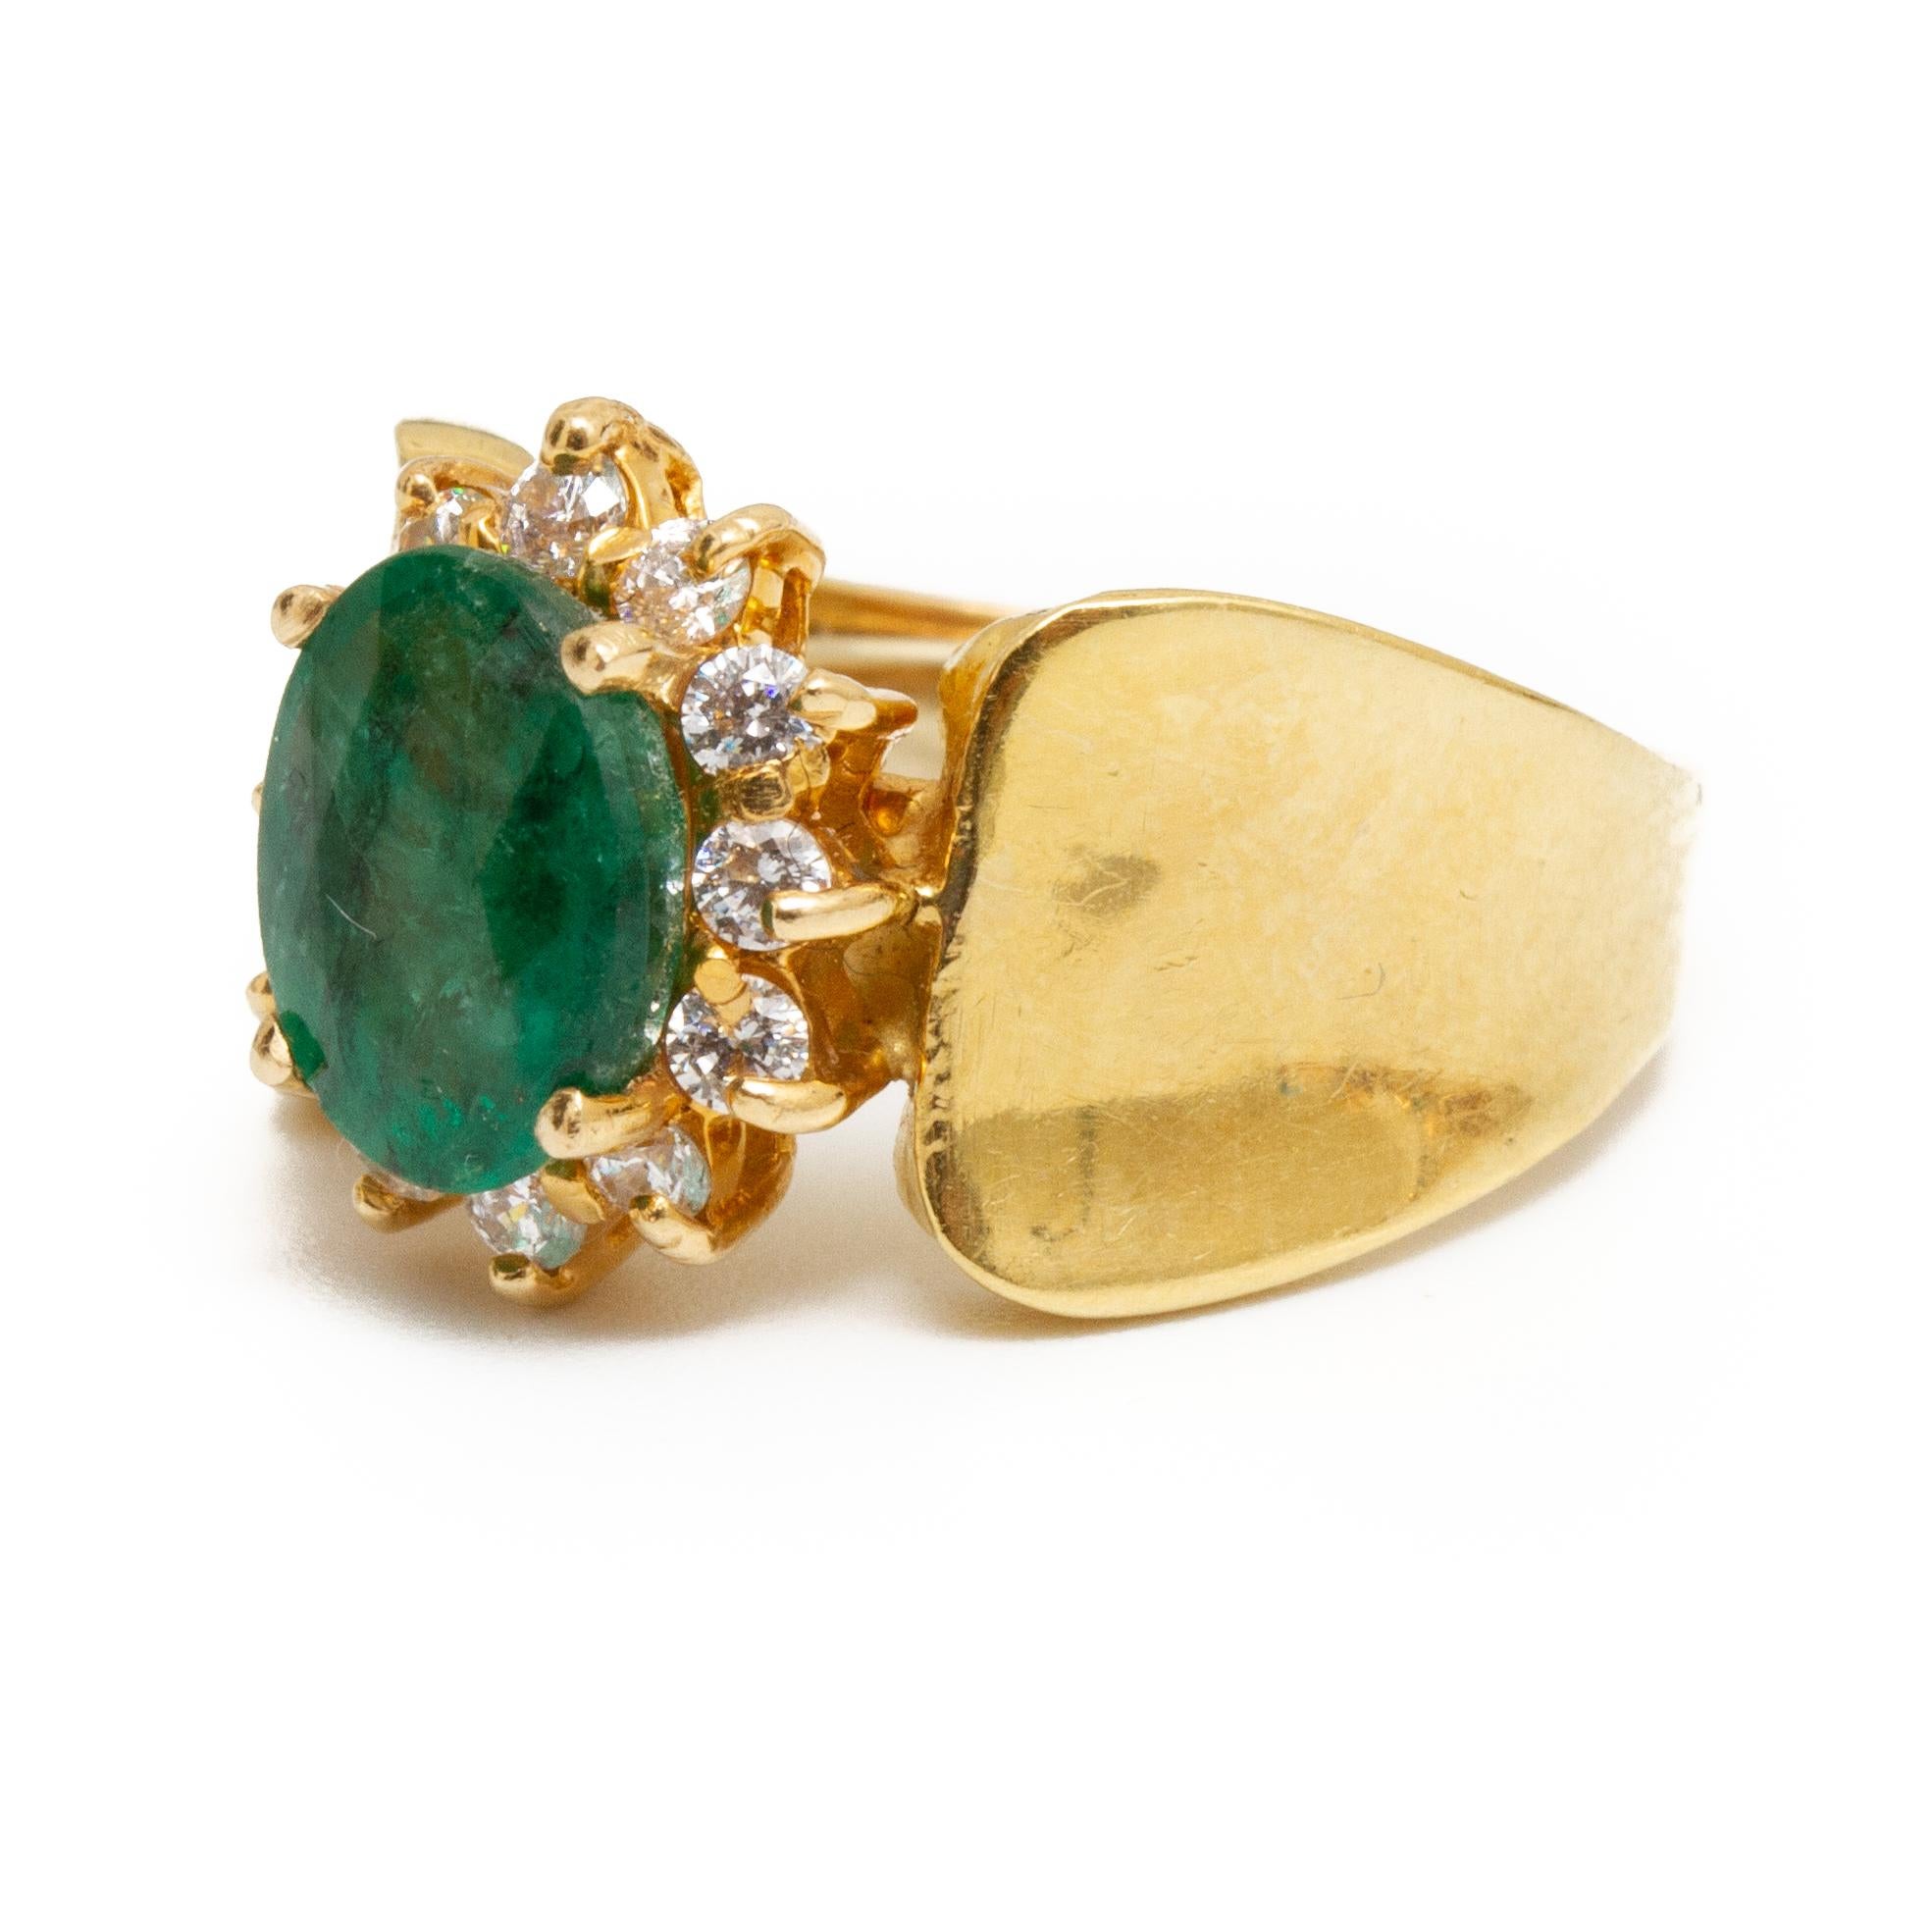 Mixed Cut 14k Gold, Emerald and Diamond Ring